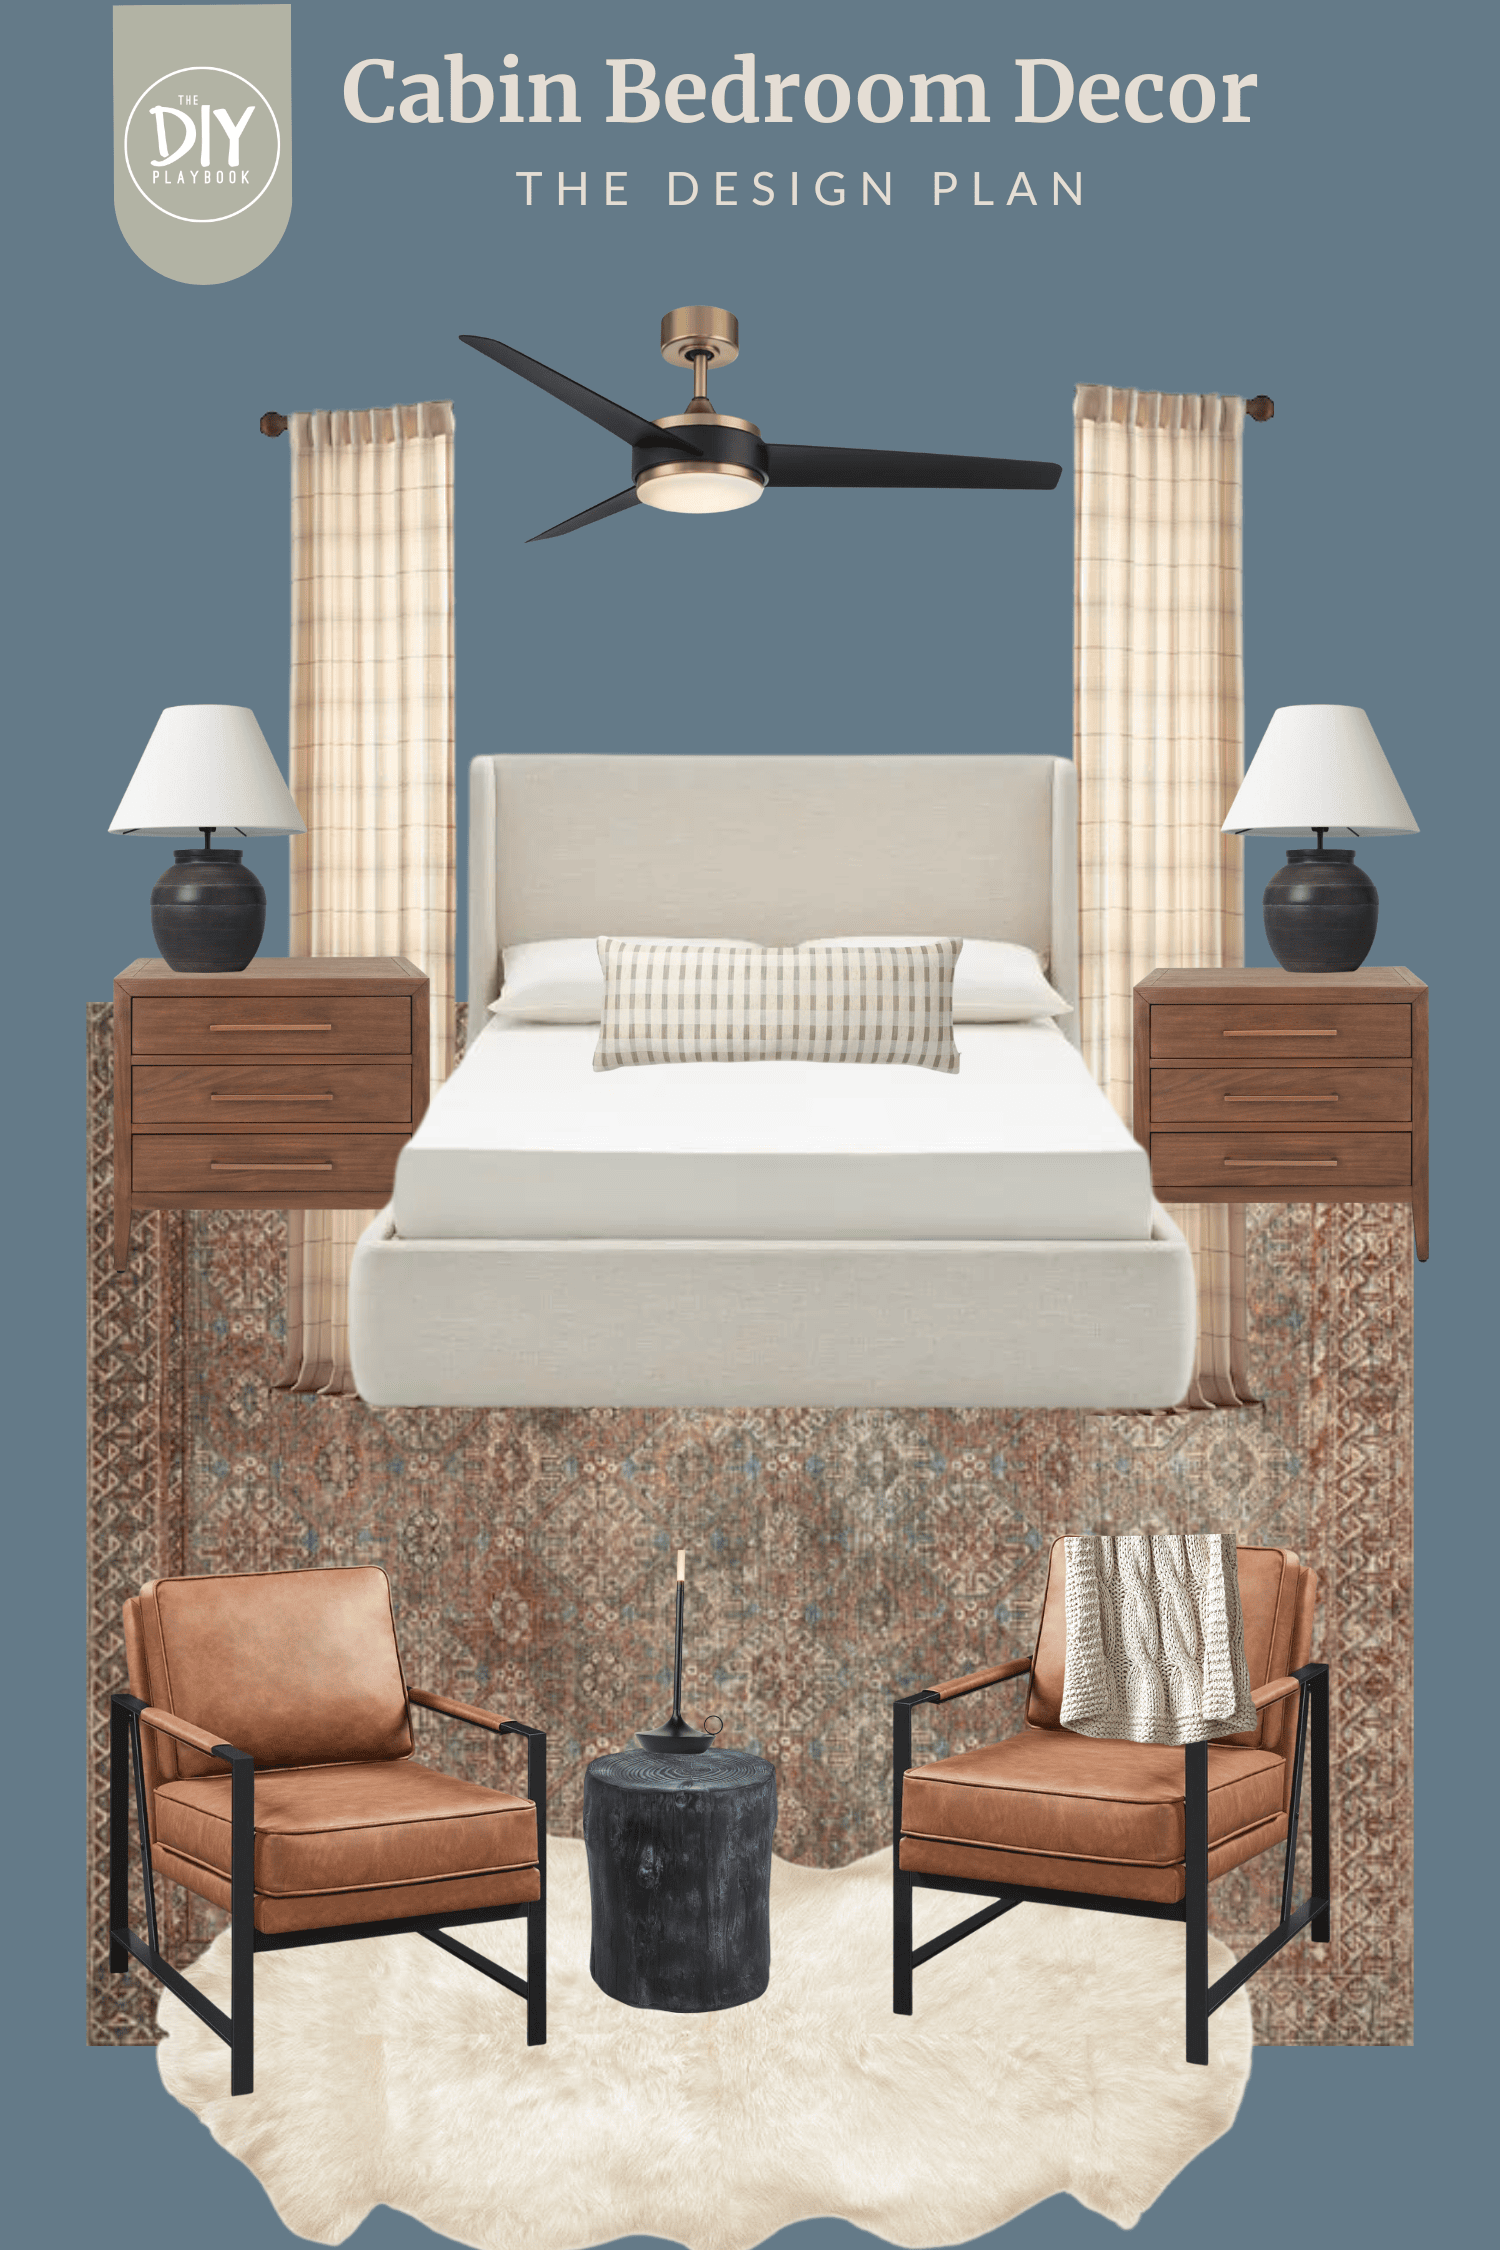 A mood board with cabin bedroom decor ideas